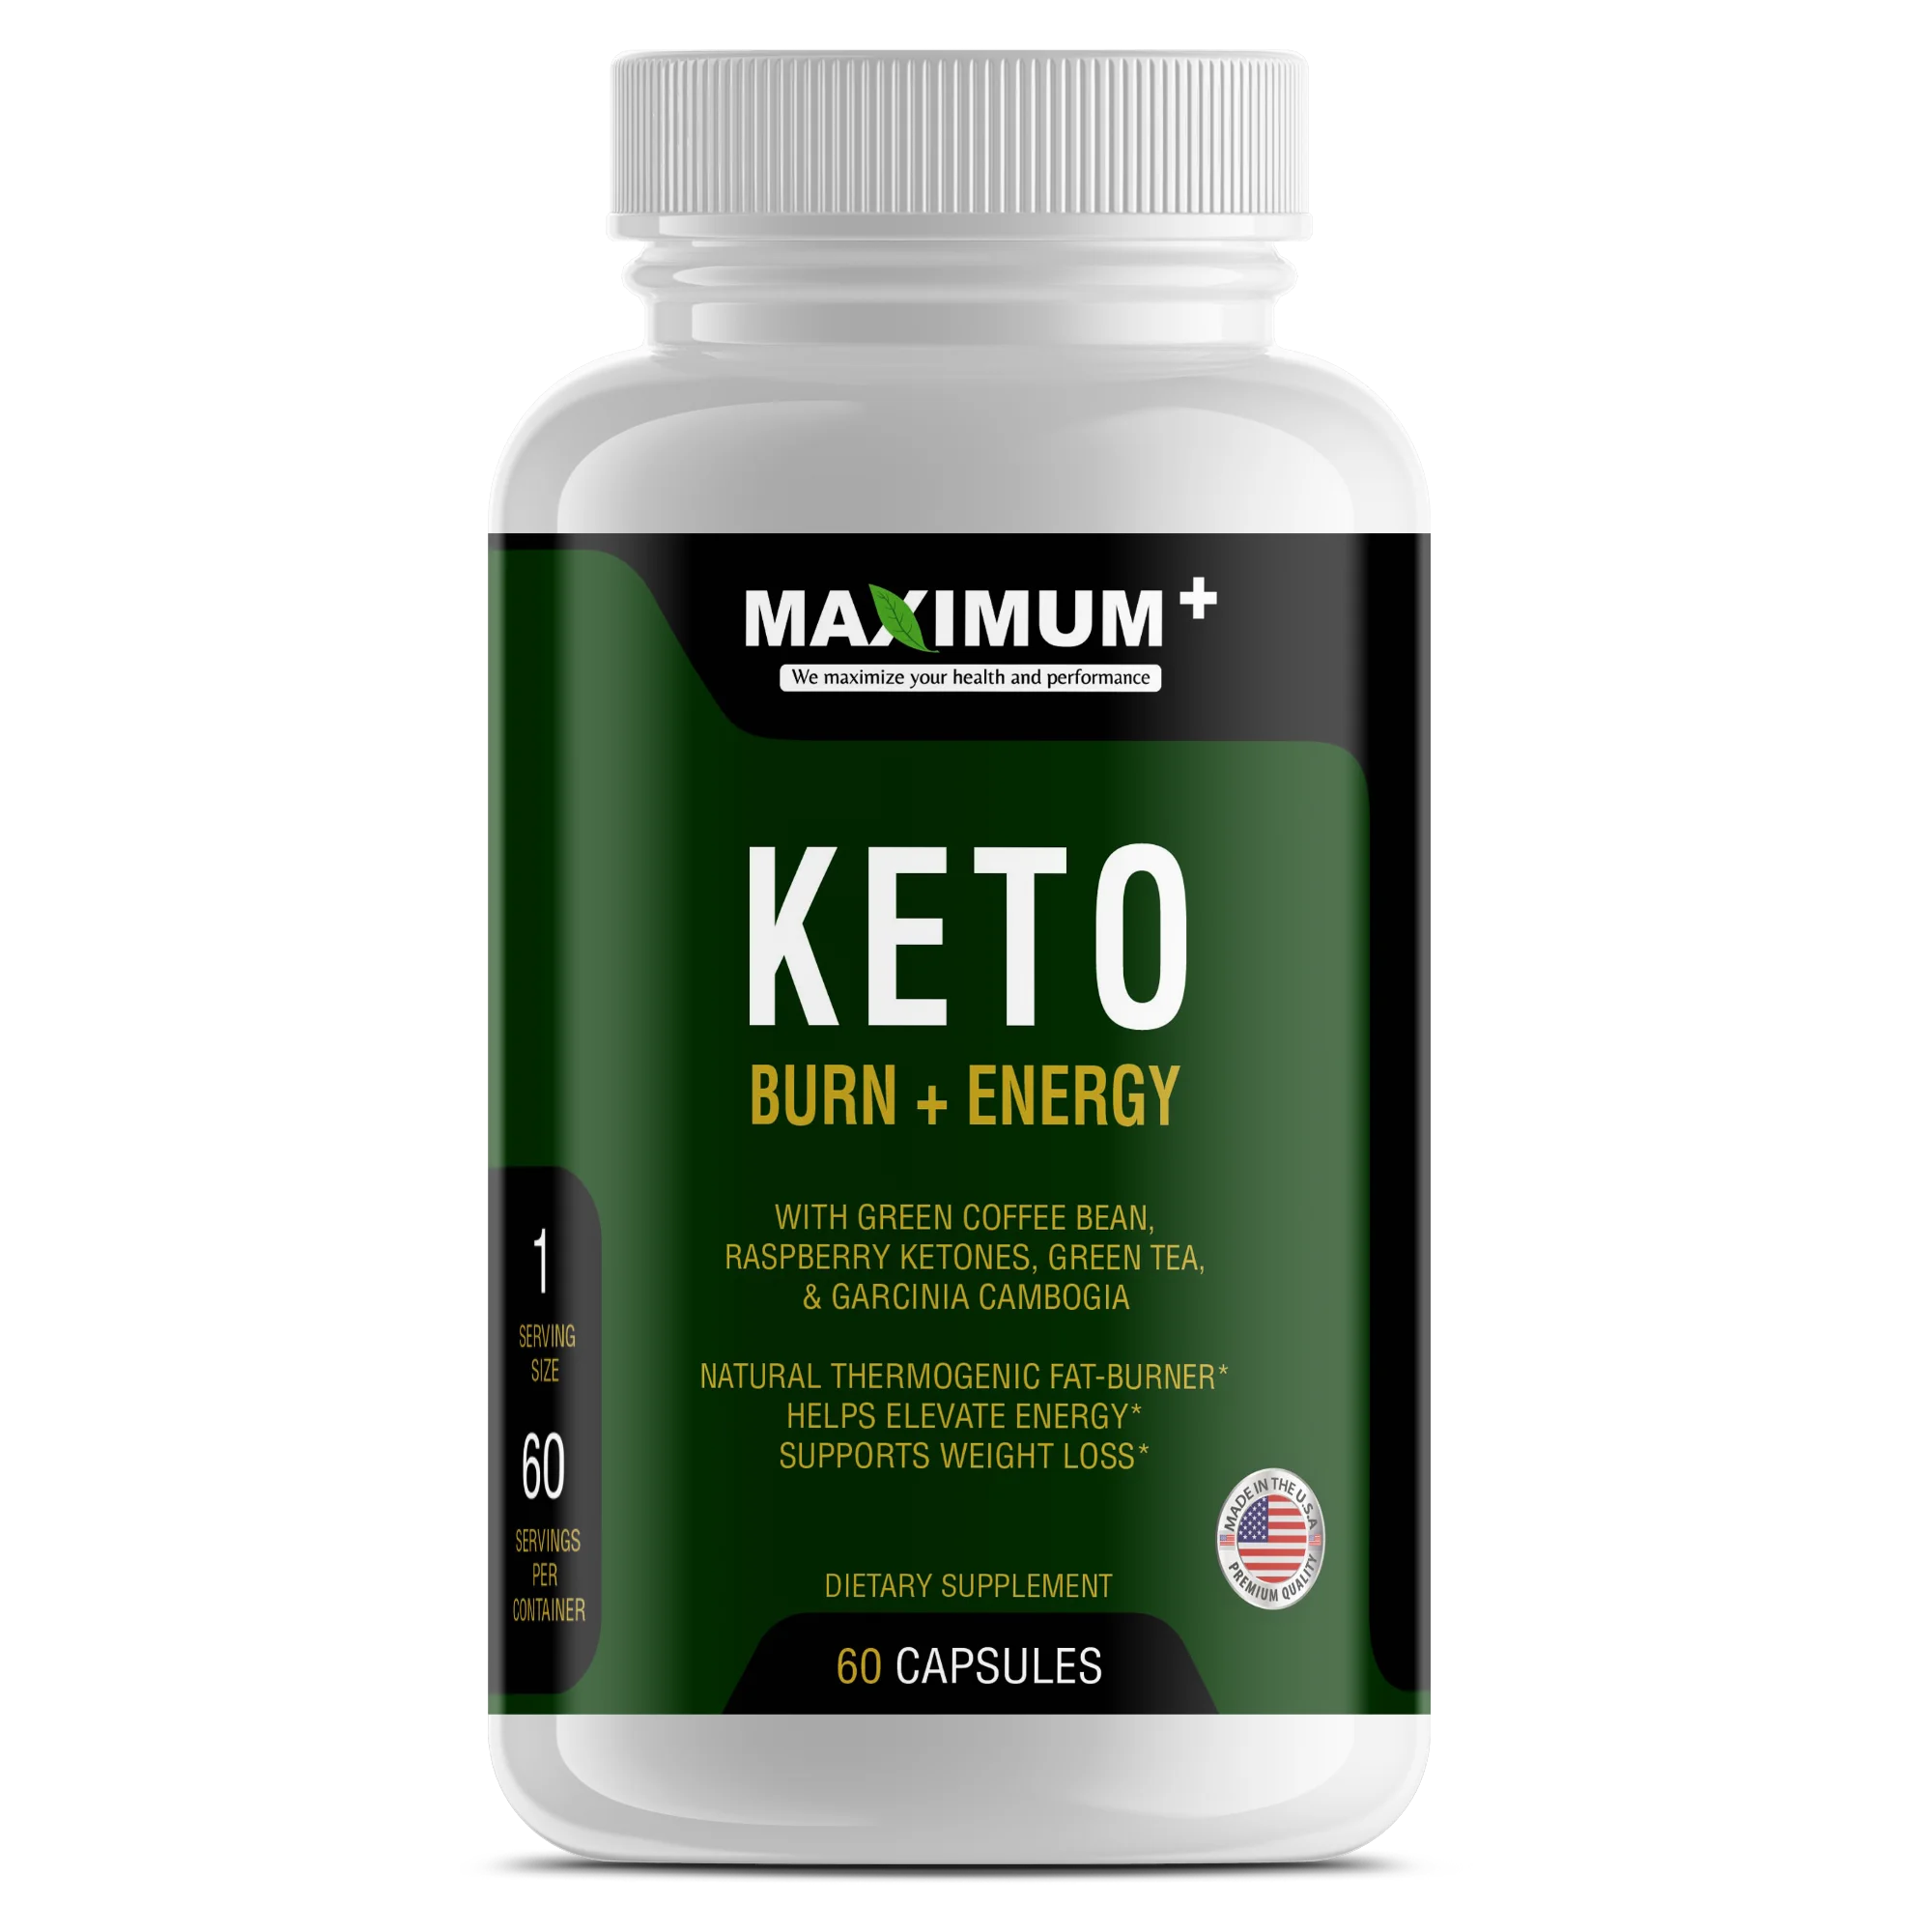 Keto – Burn + Energy